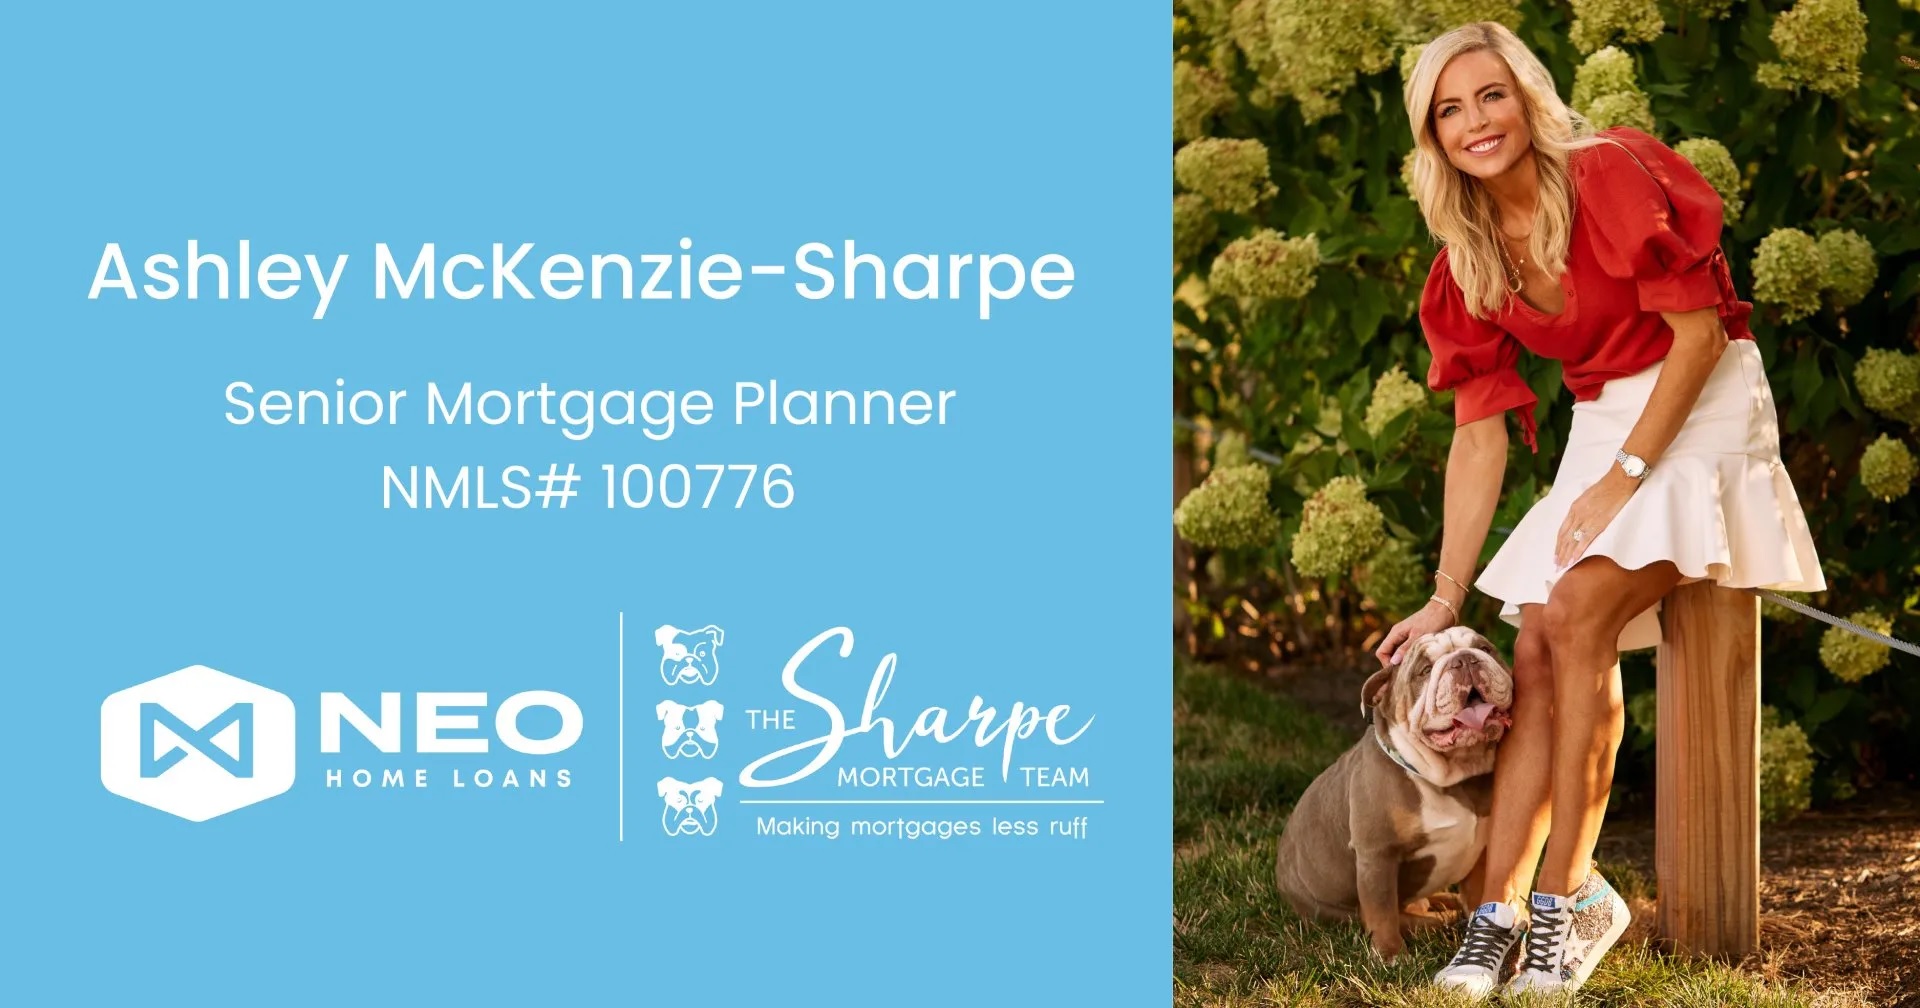 NEO HOME LOANS | The Ashley Sharpe Mortgage Team 